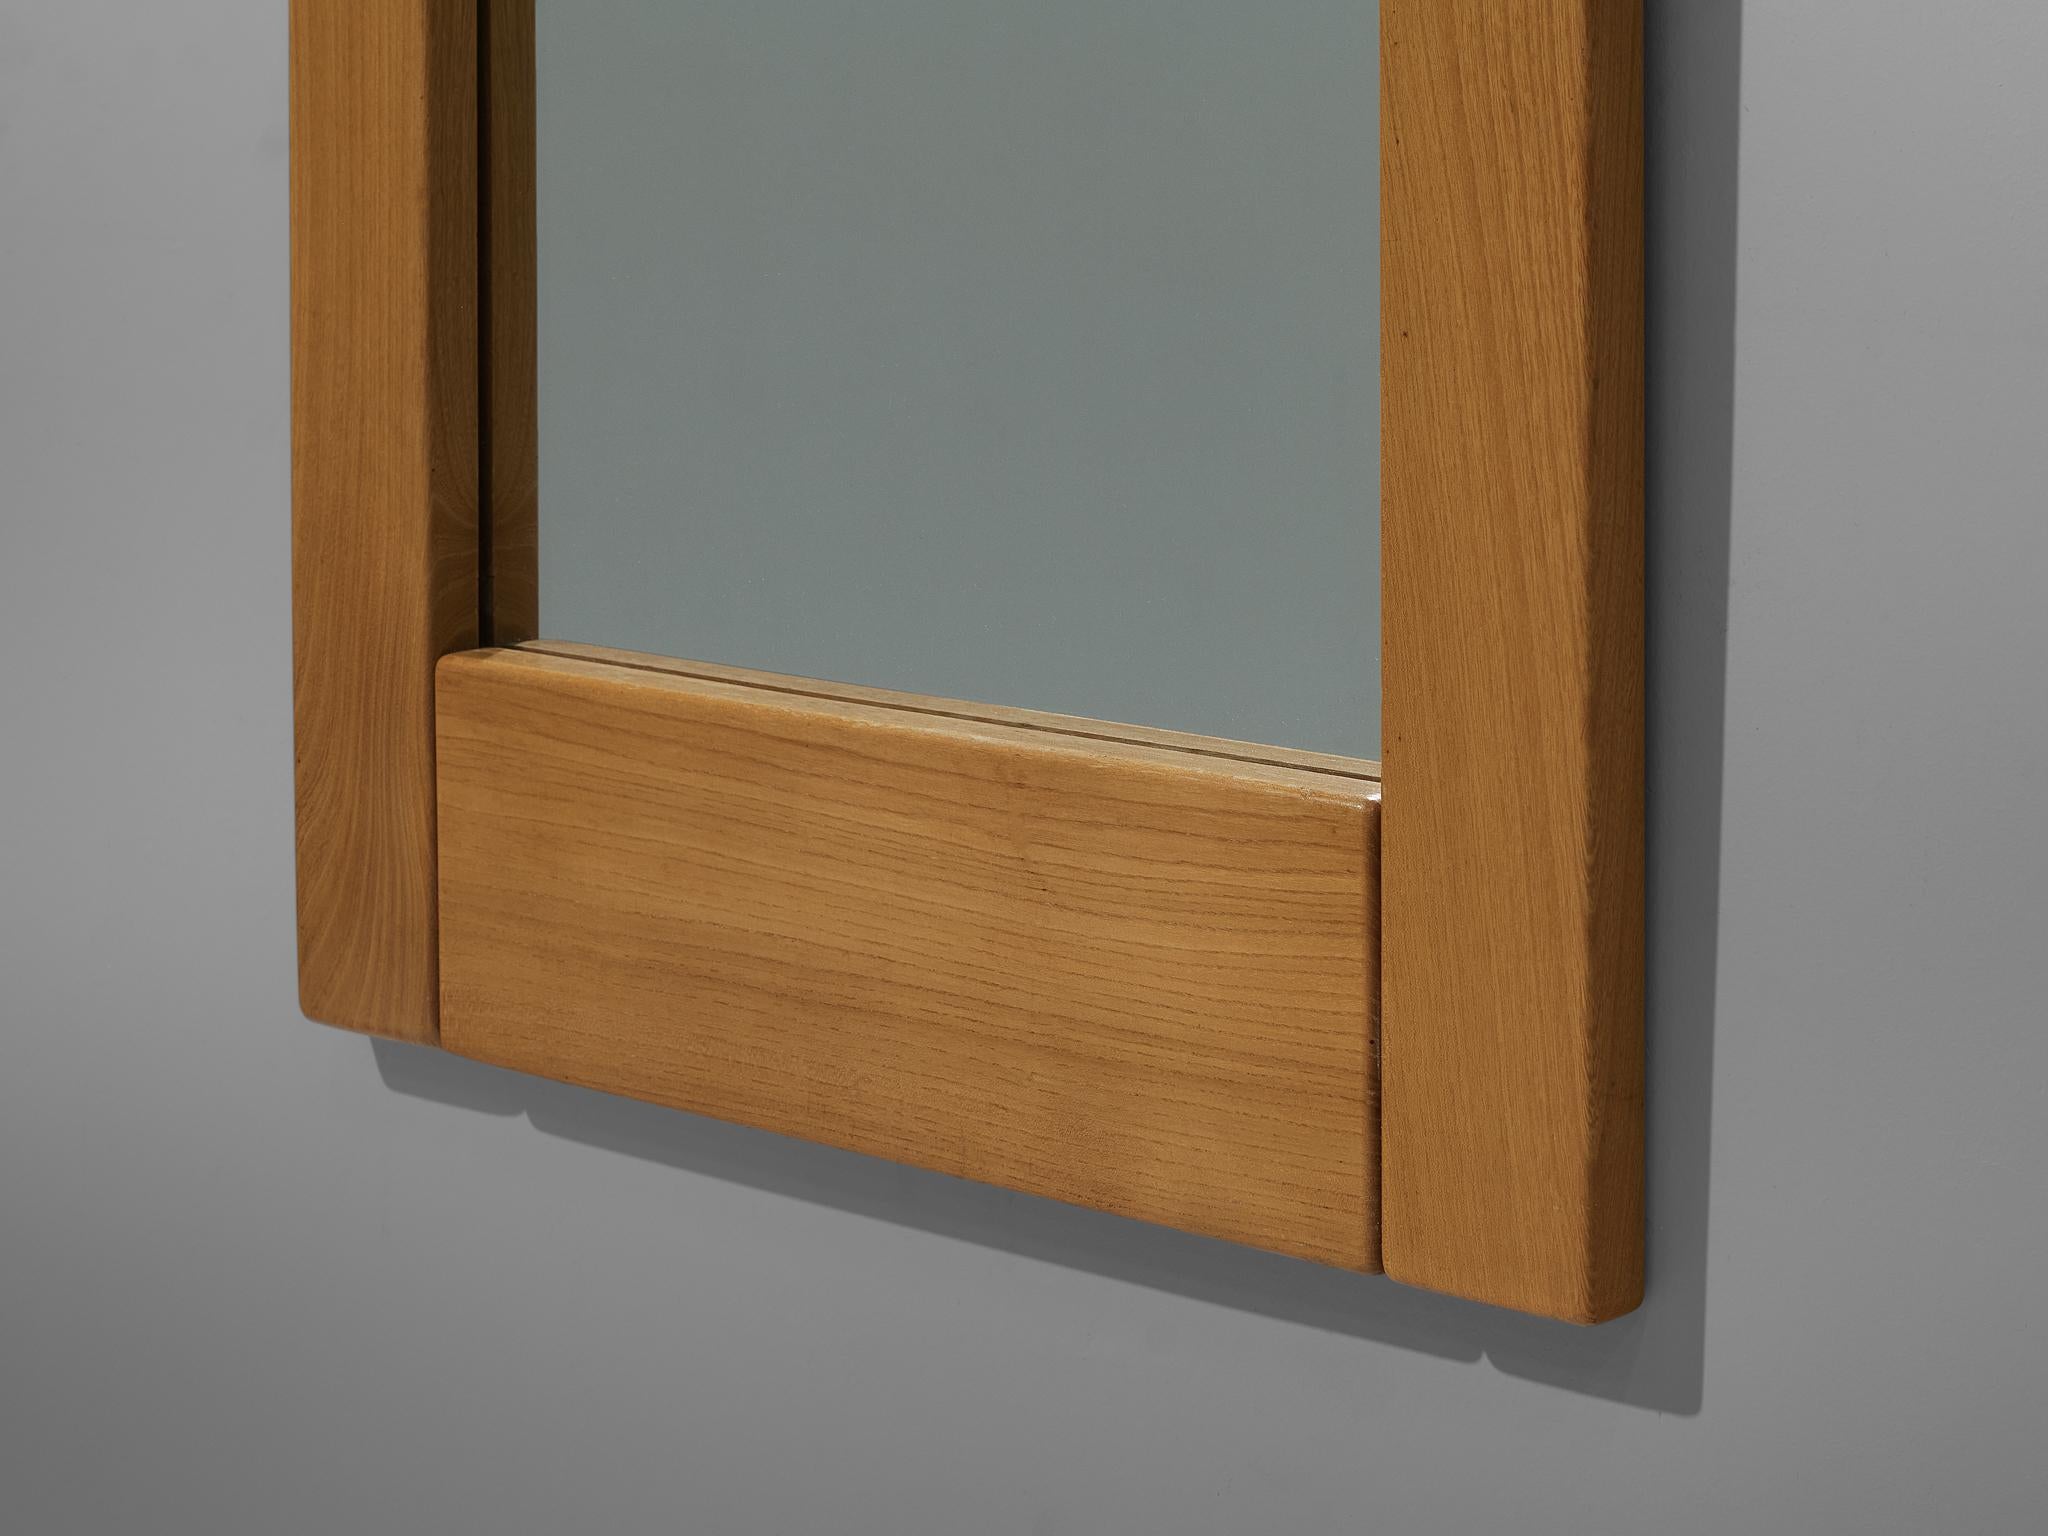 Late 20th Century Maison Regain Rectangular Mirror with Elm Wood Frame